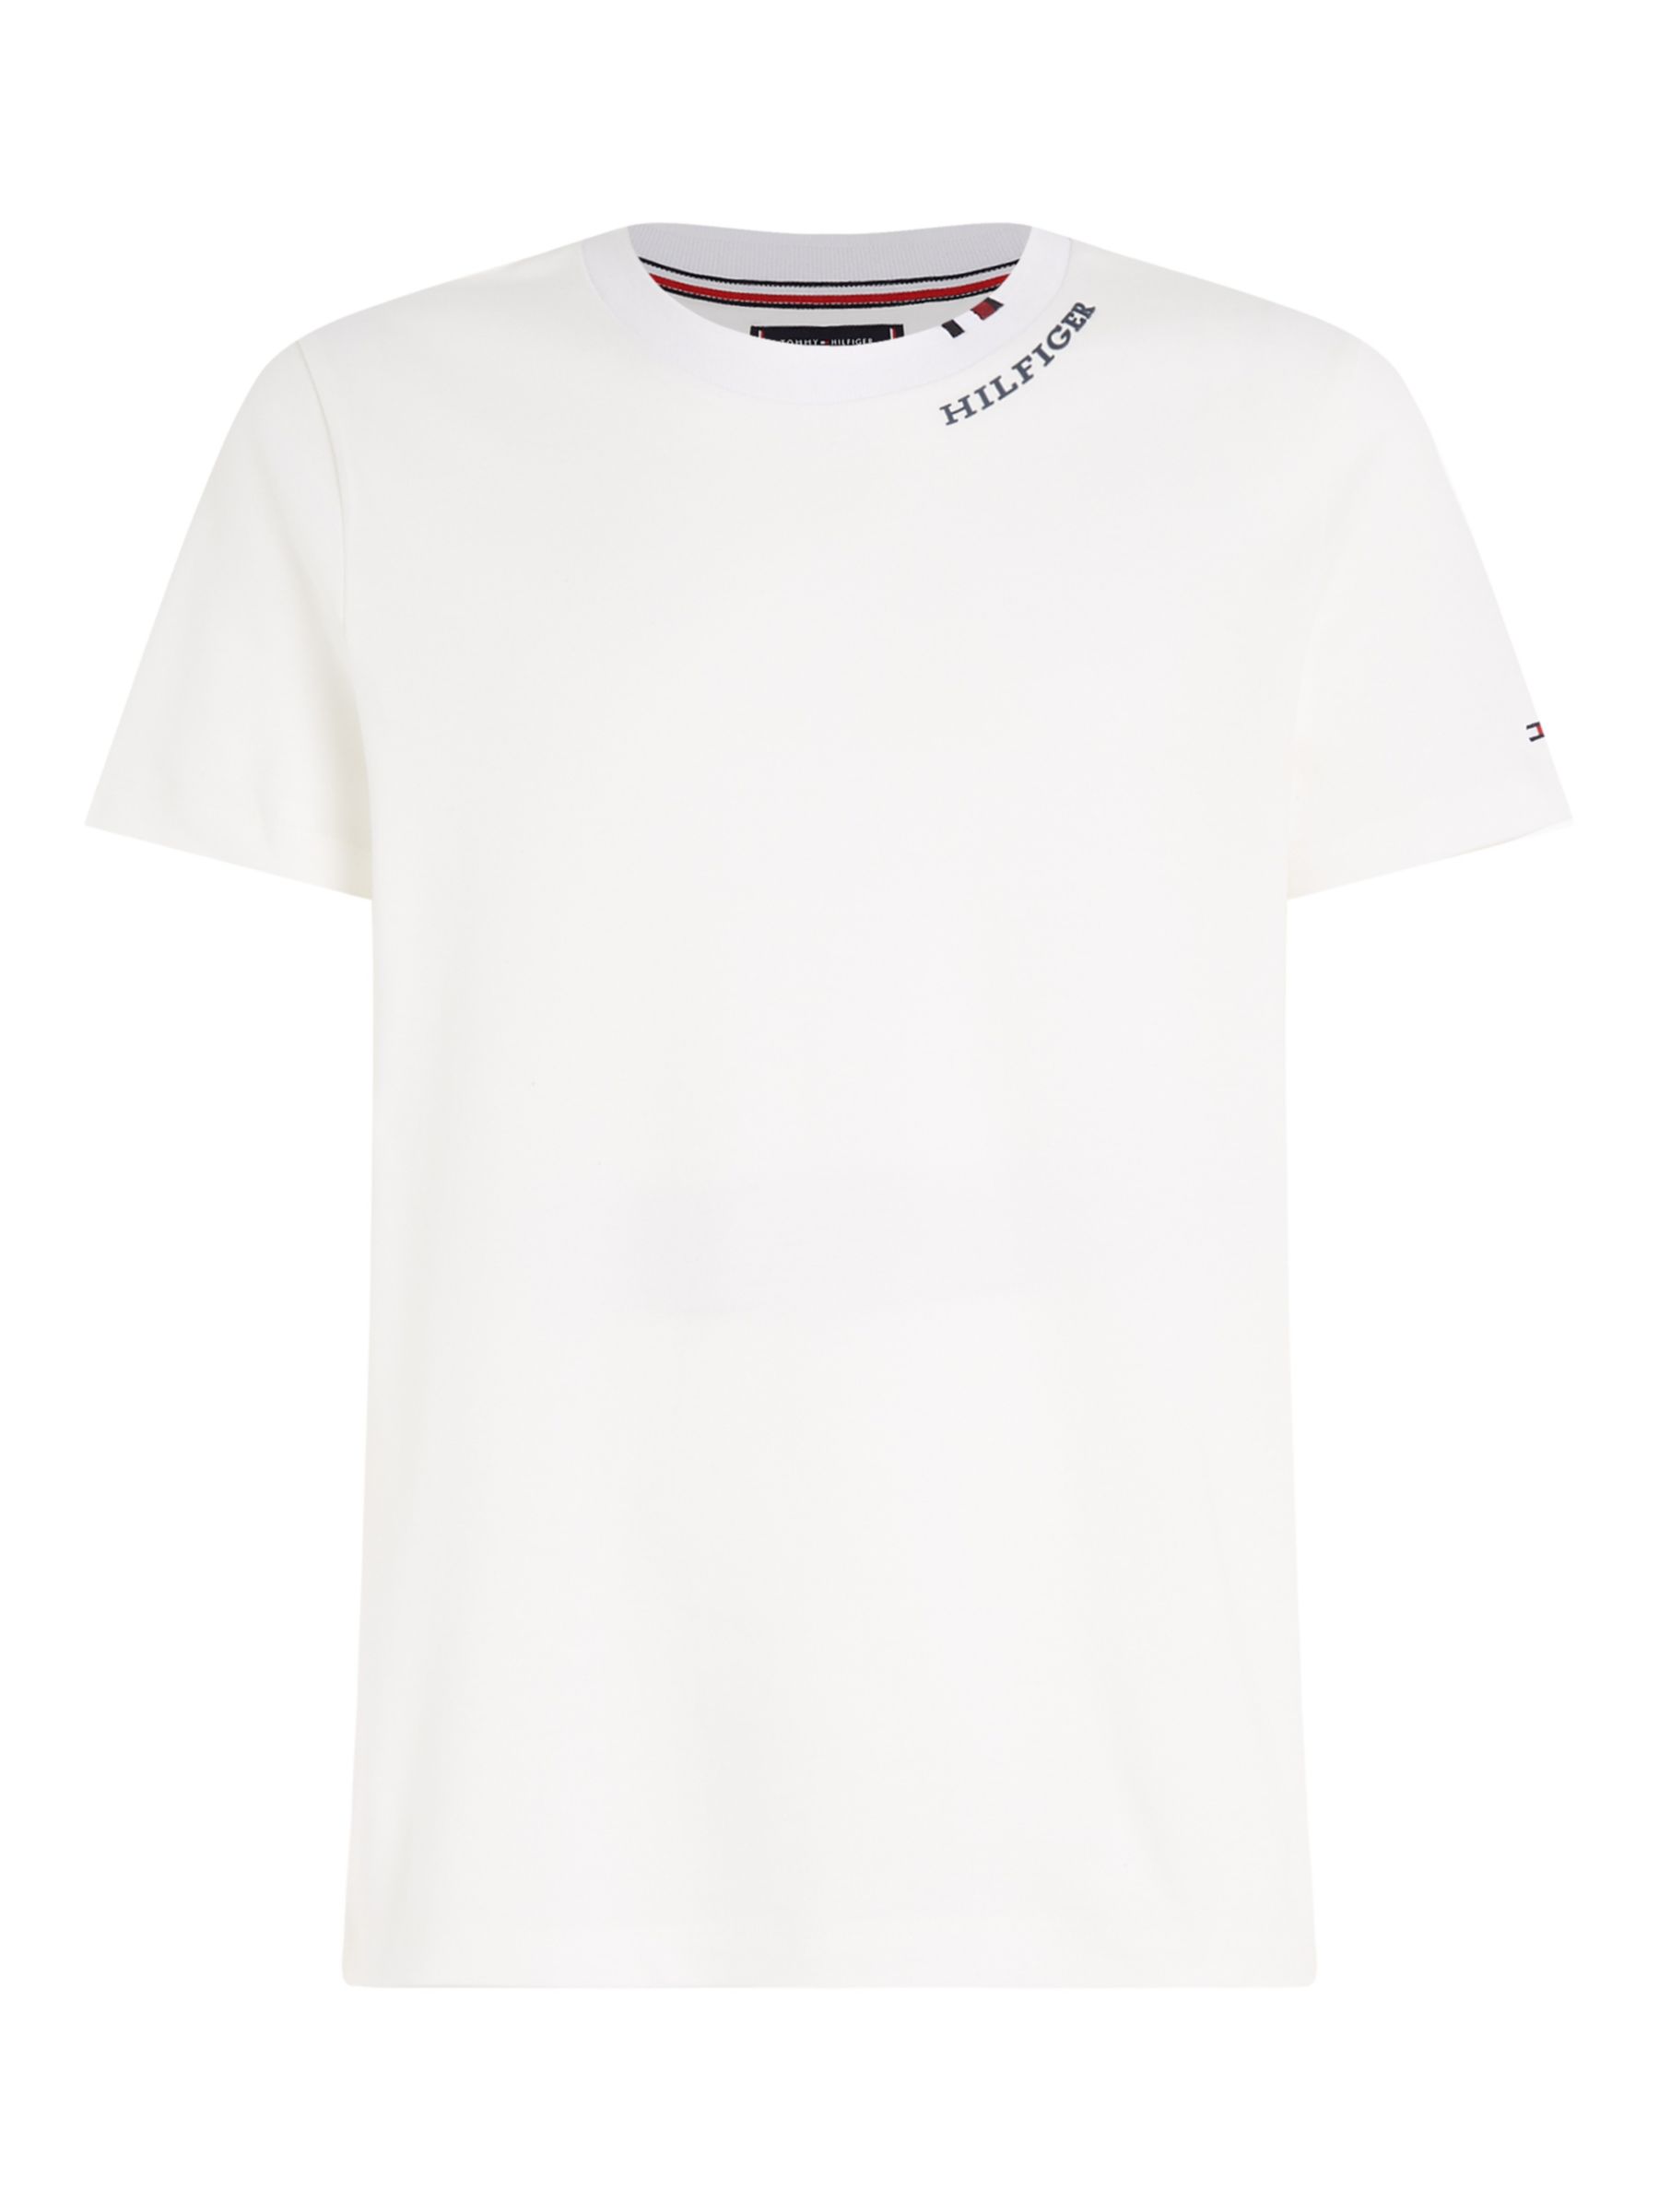 Tommy Hilfiger Pique T-Shirt, White at John Lewis & Partners